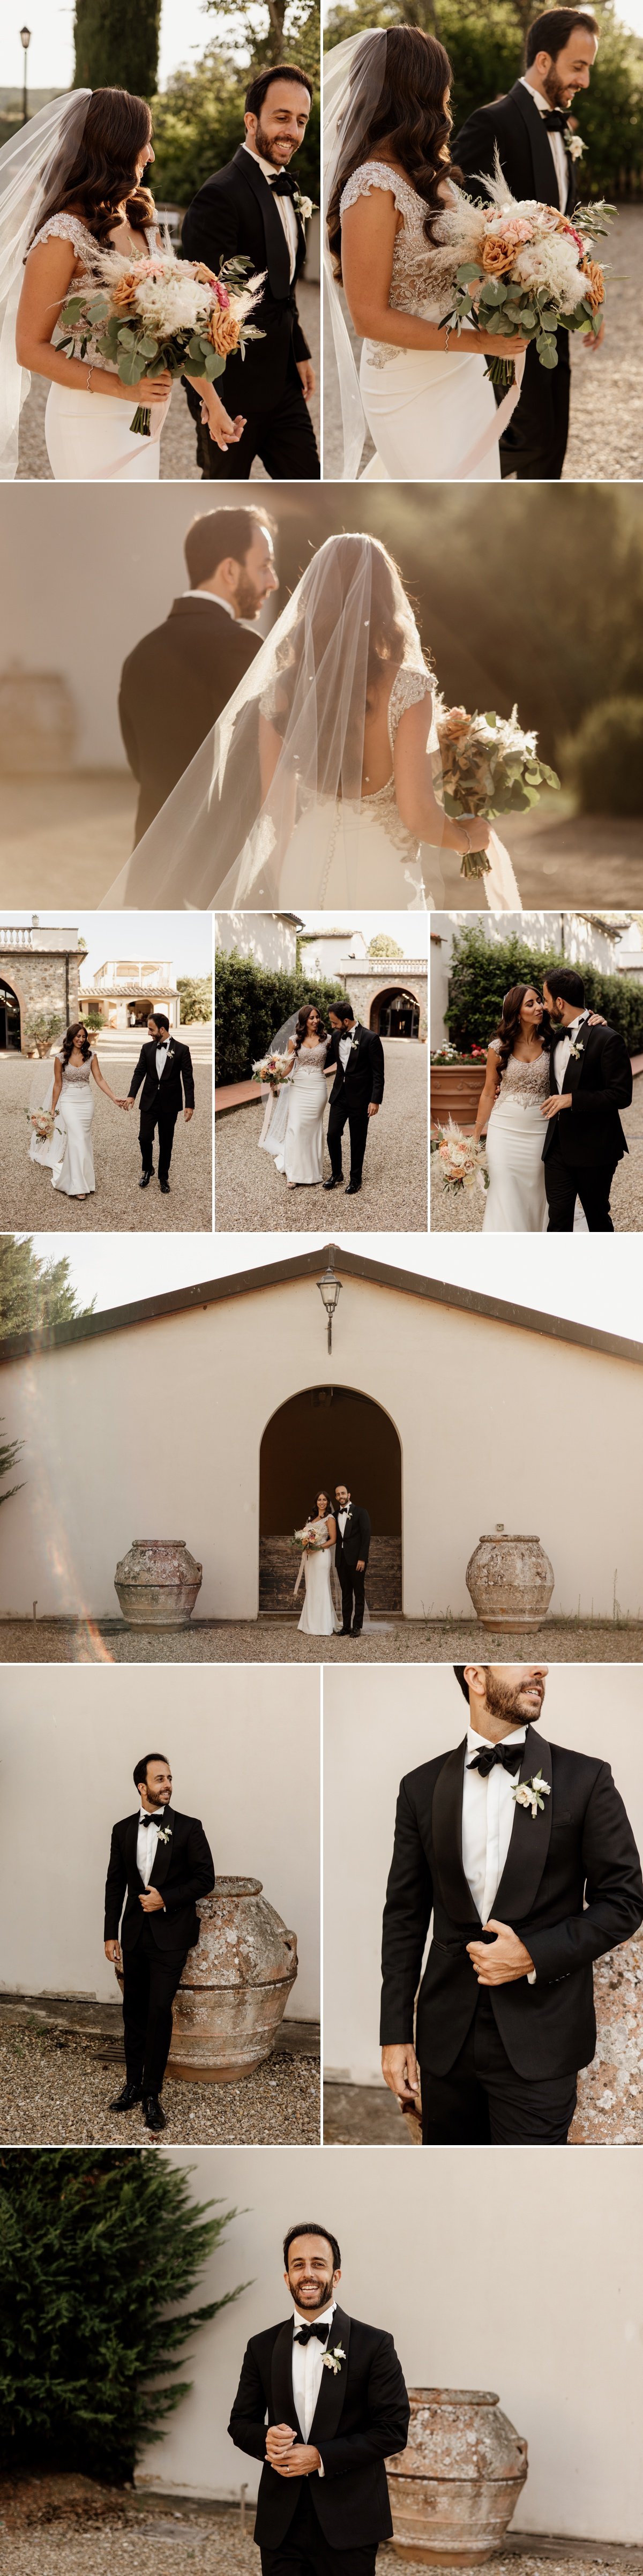 tuscany-wedding-dallk-15.jpg